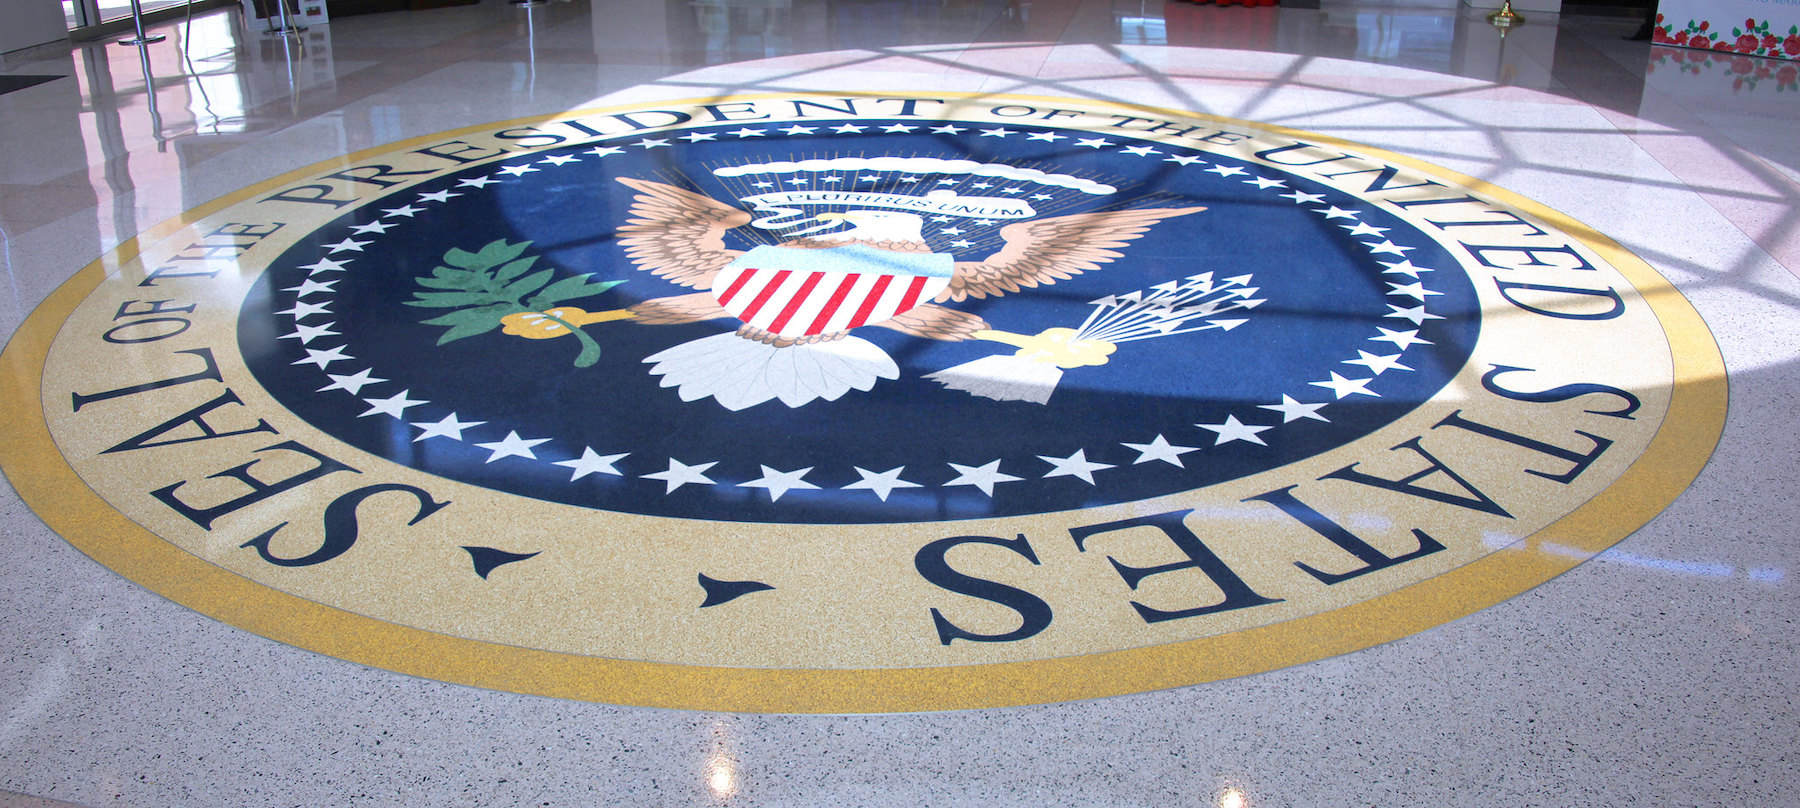 Photo of US Presidential Seal on a lobby floor